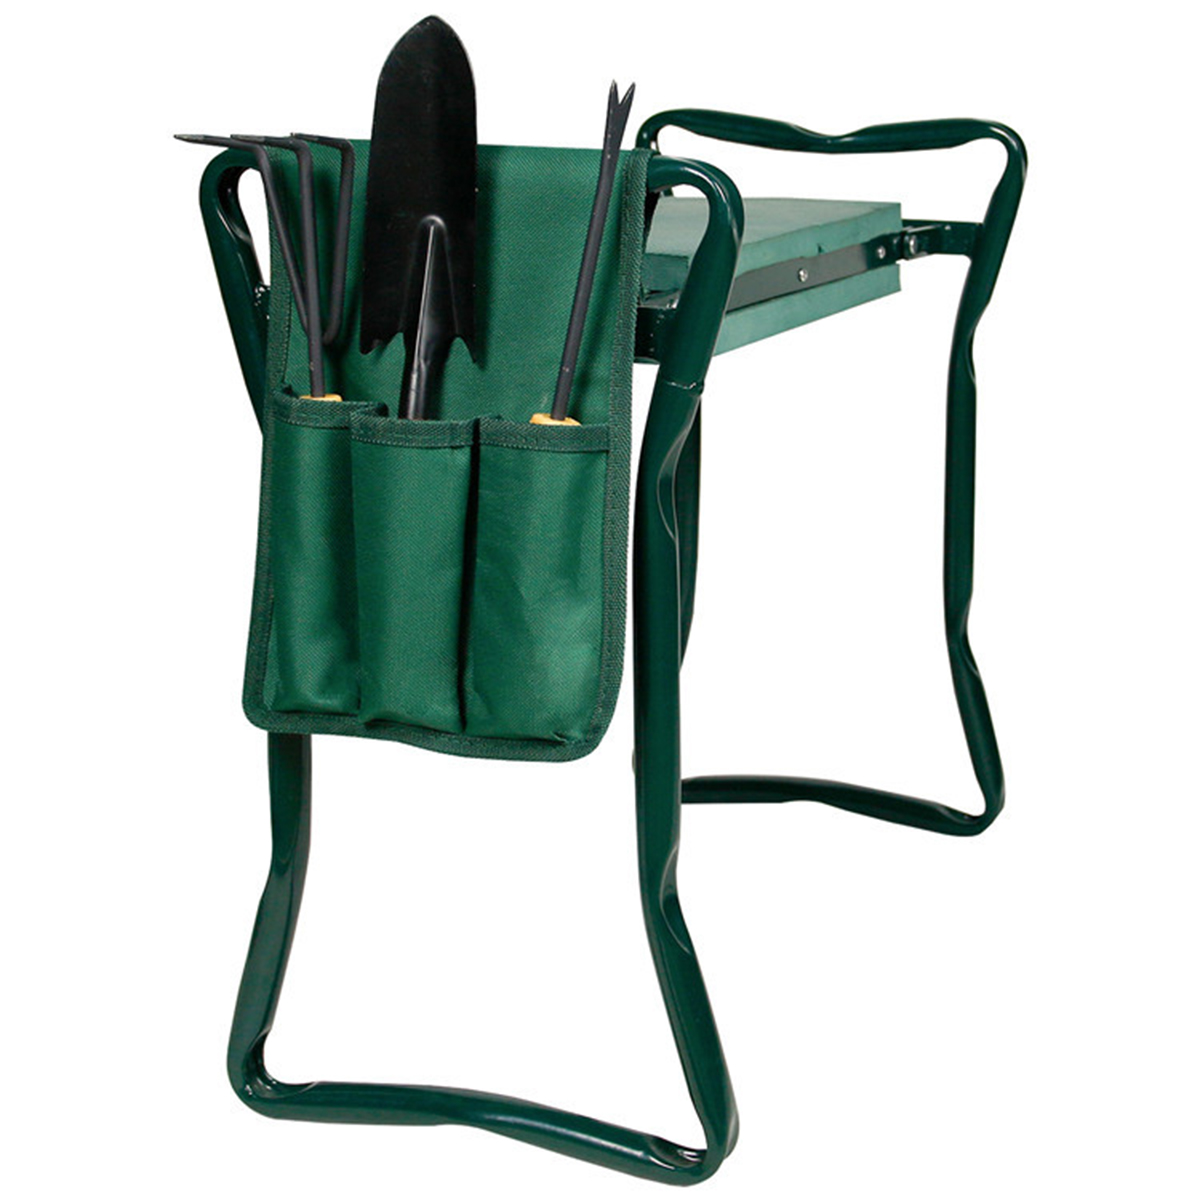 Garden-Kneeler-Tool-Oxford-Bag-Gardener-for-Kneeling-Chair-Garden-Tool-Bag-1863074-7